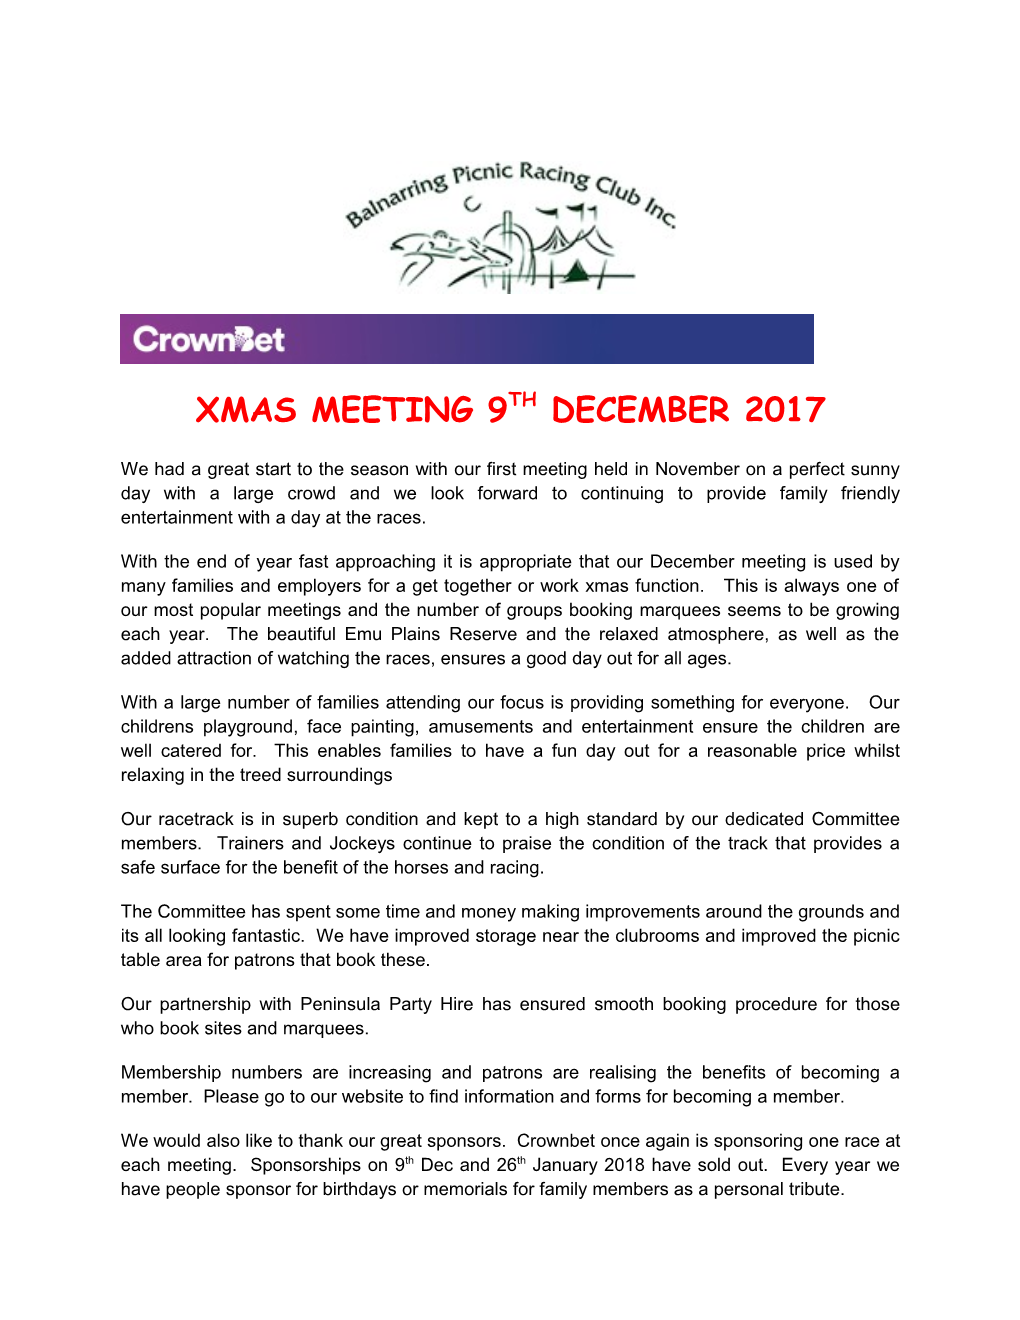 Xmas Meeting 9Th December 2017